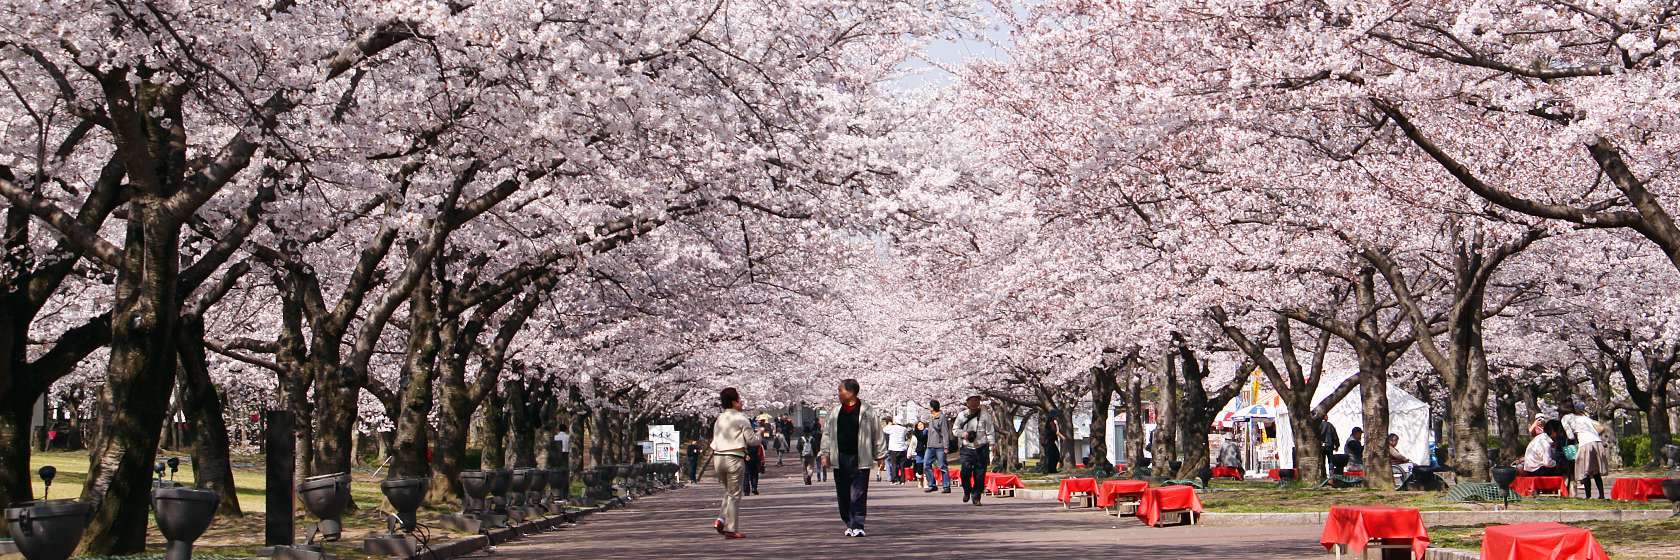 japanese cherry blossom photos